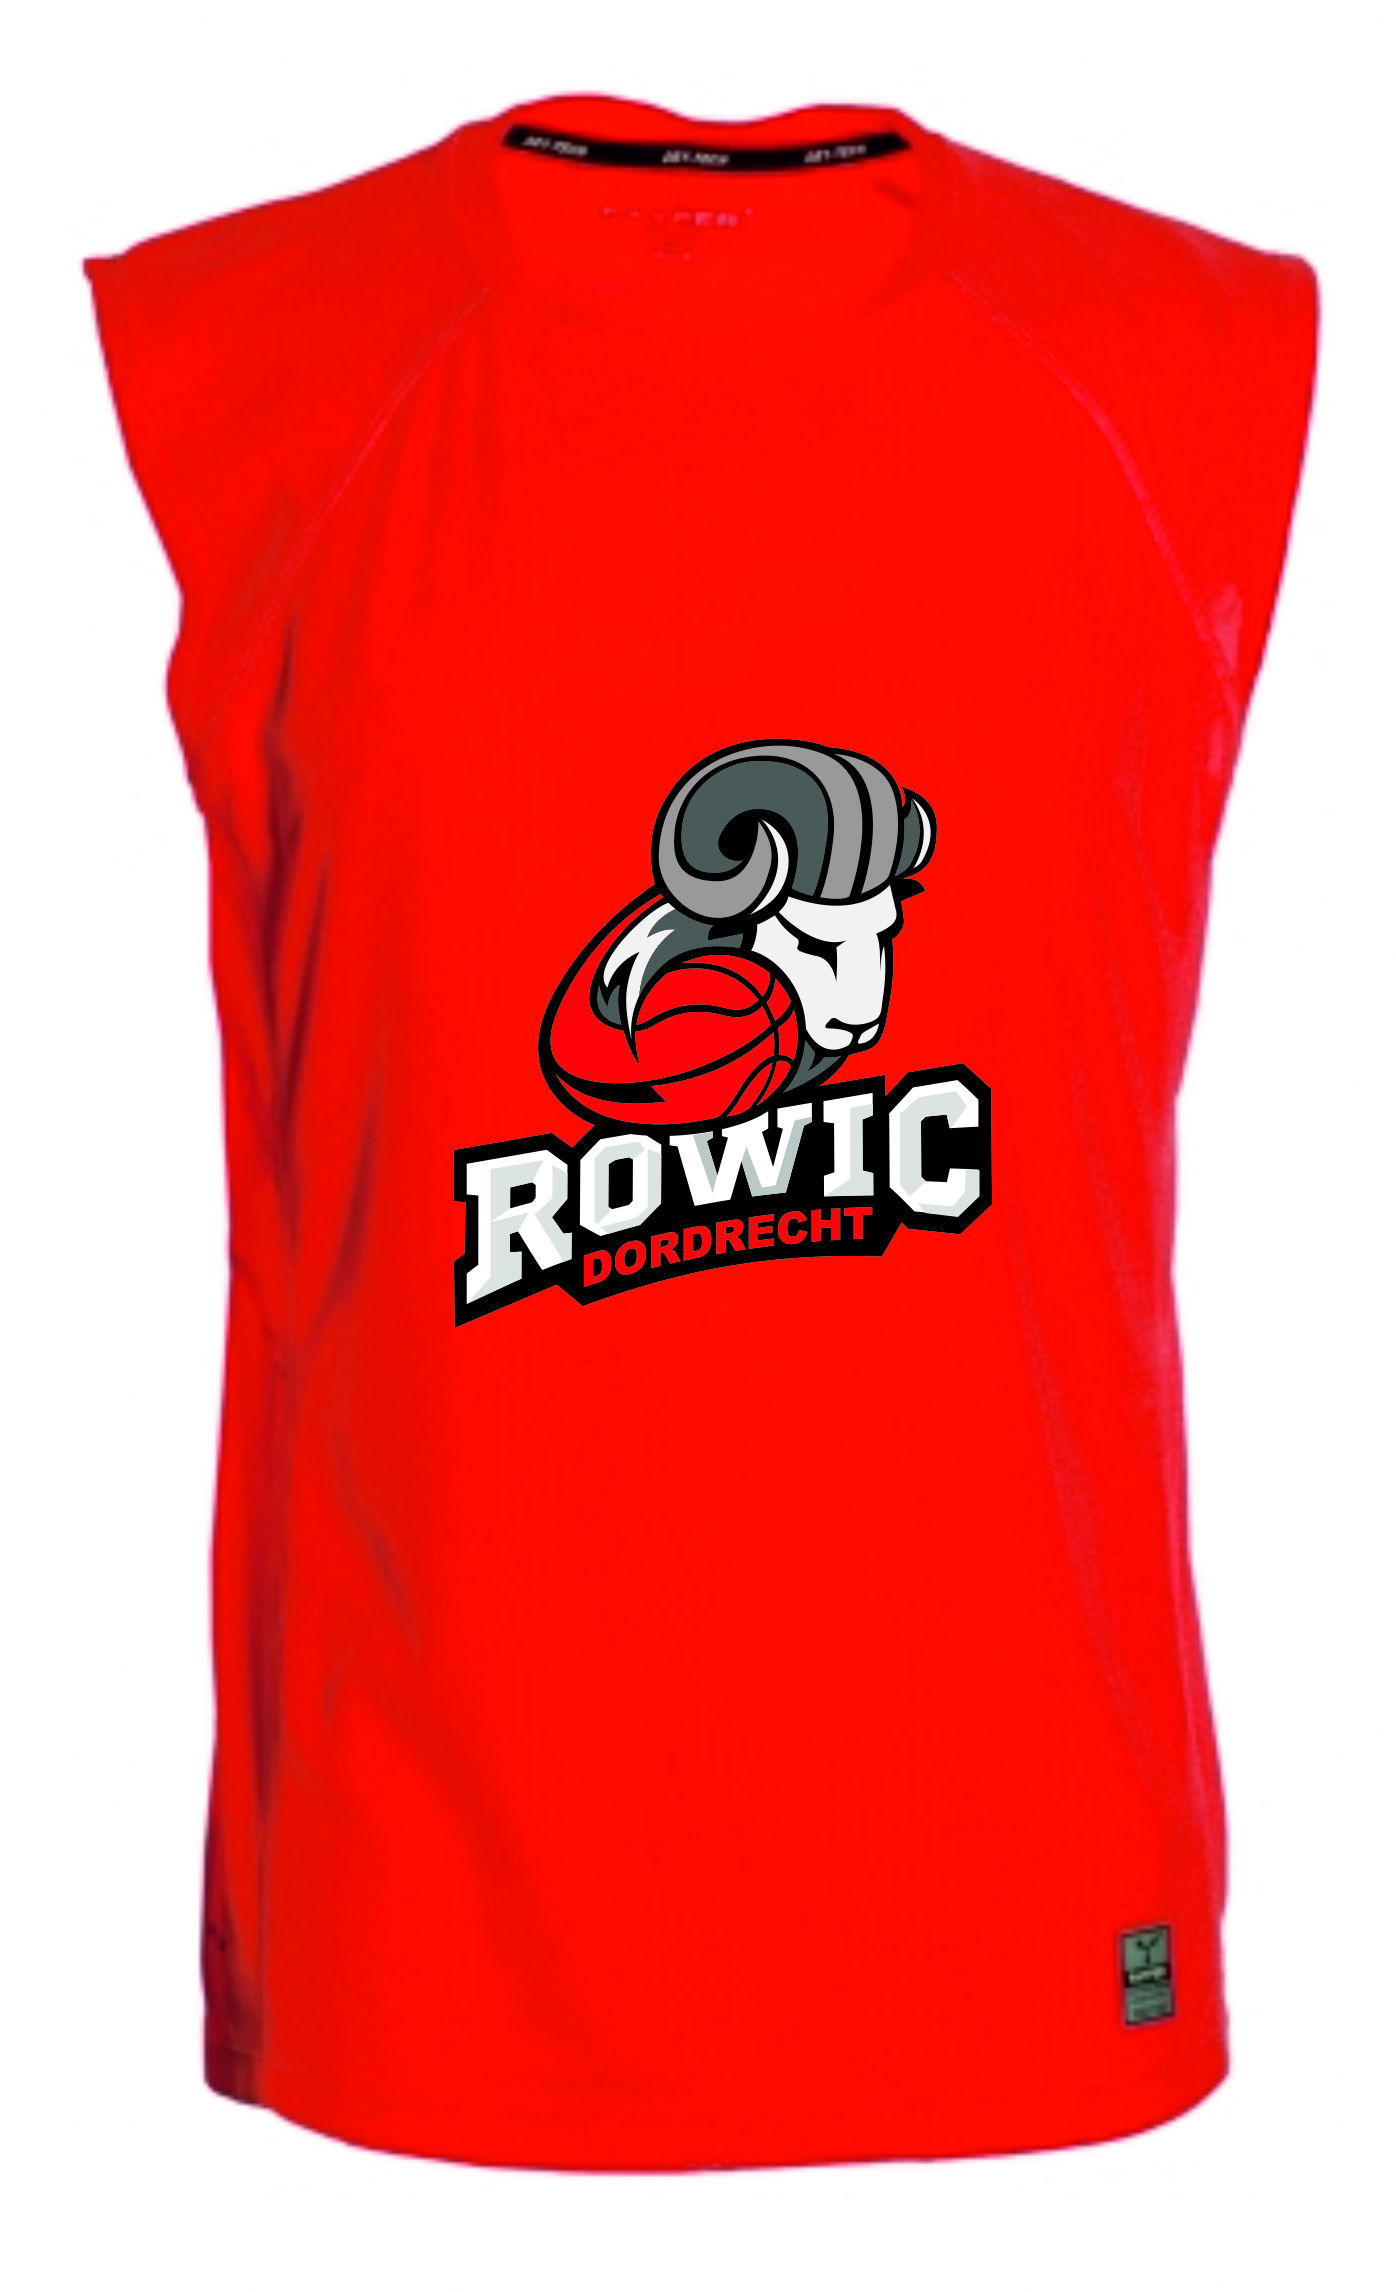 Rowic urban jersey